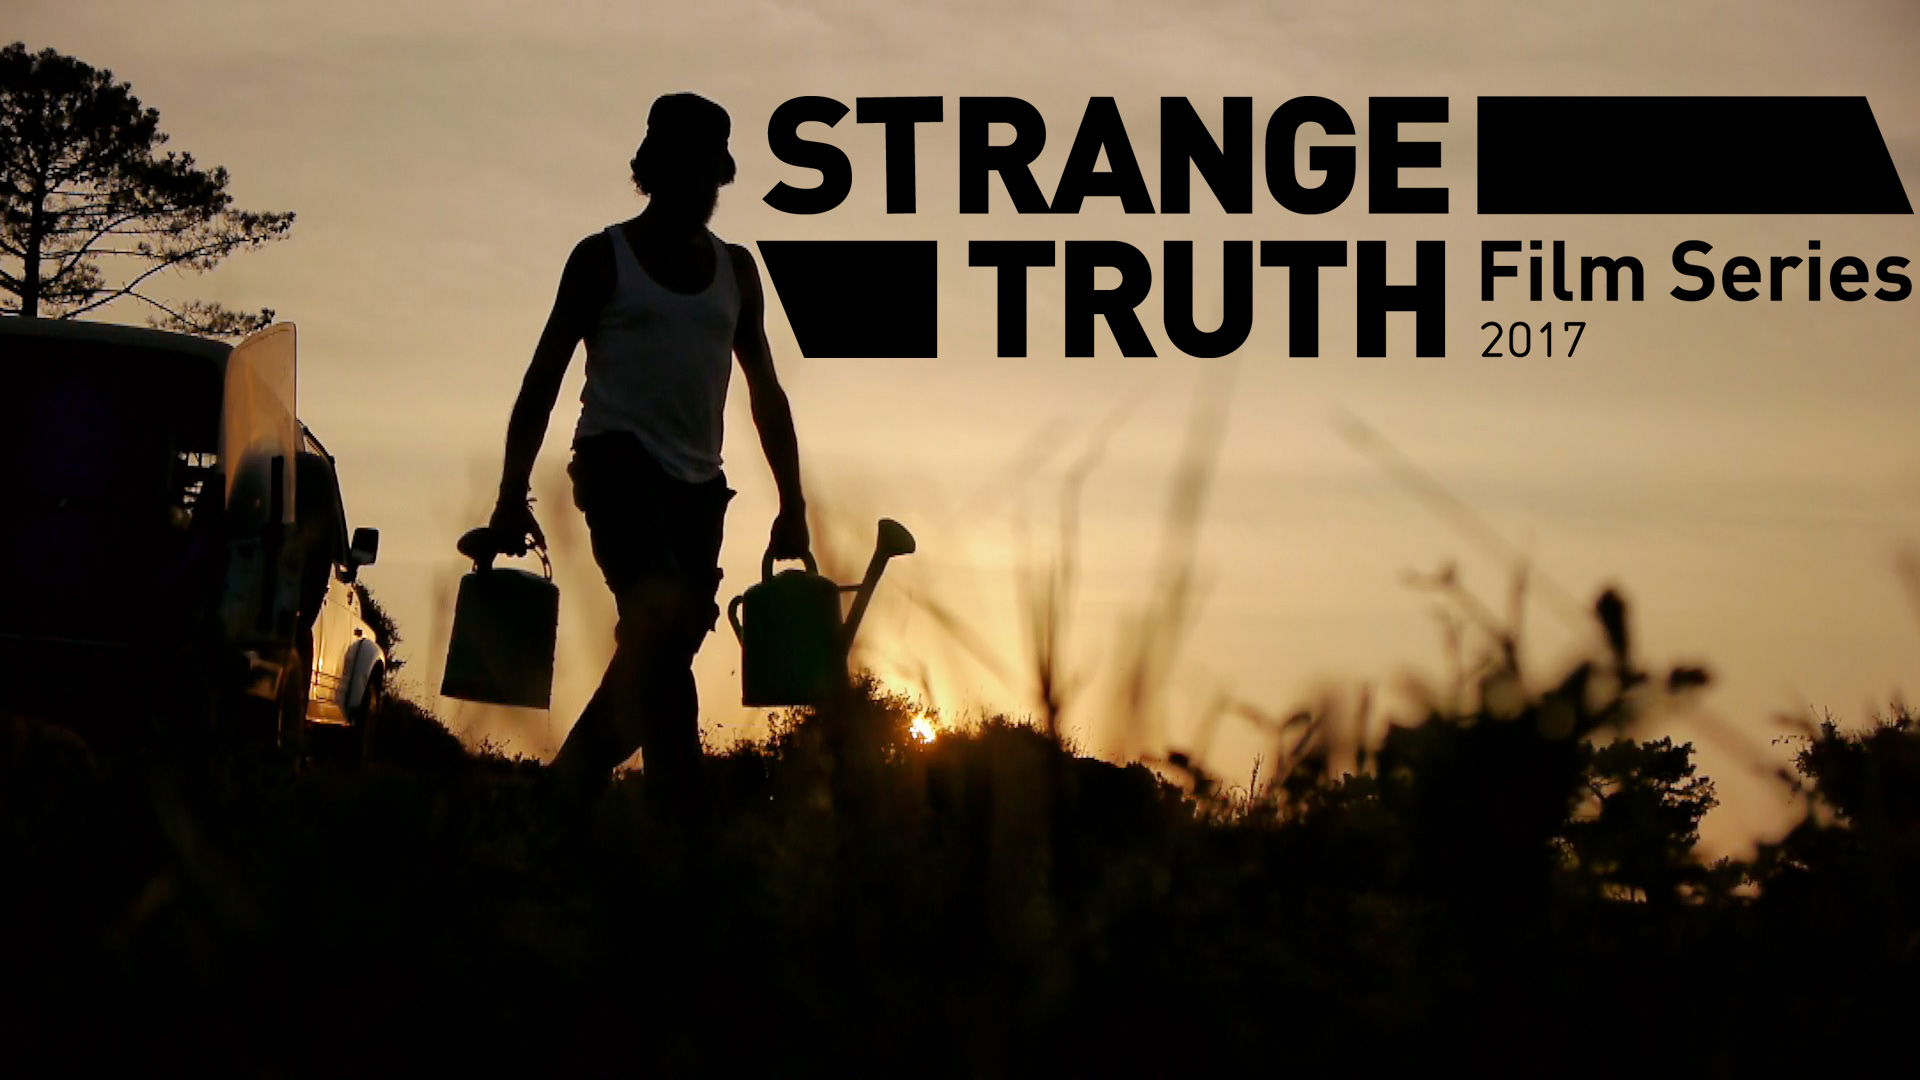 STRANGE TRUTH film series, 2017